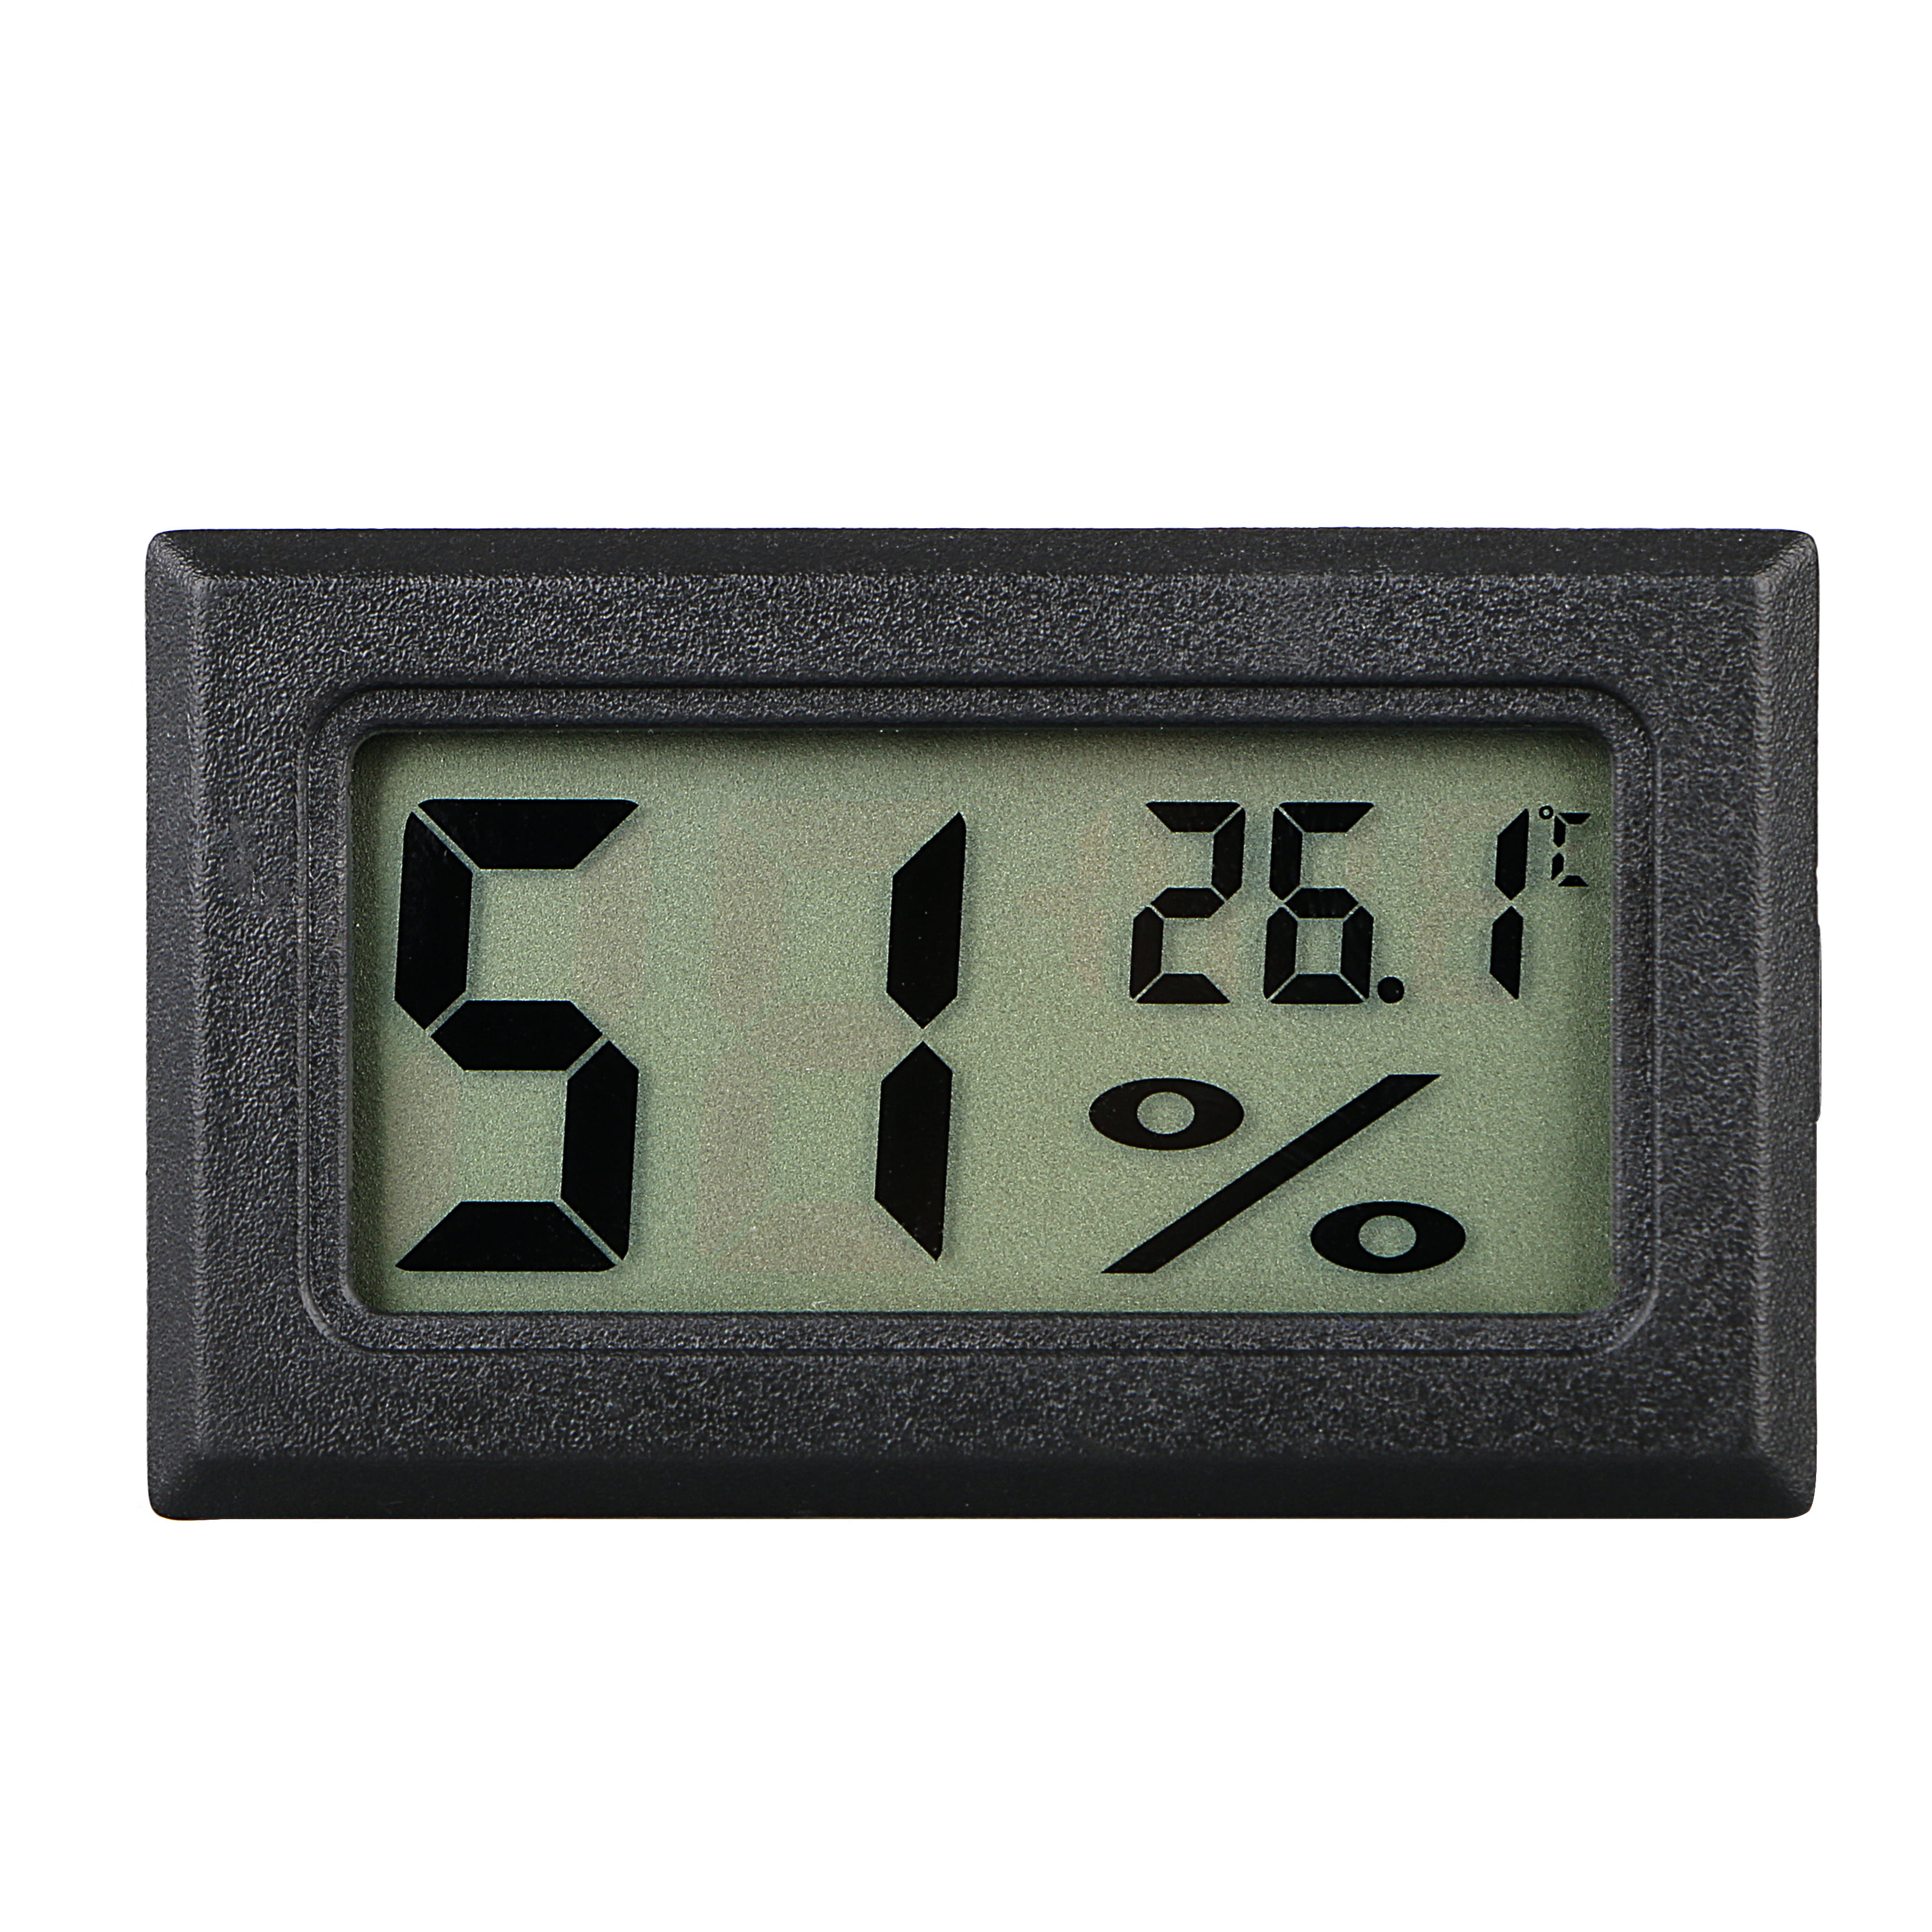 Sensor Temperature Humidity Hygrometer Digital LCD Indoor Thermometer 